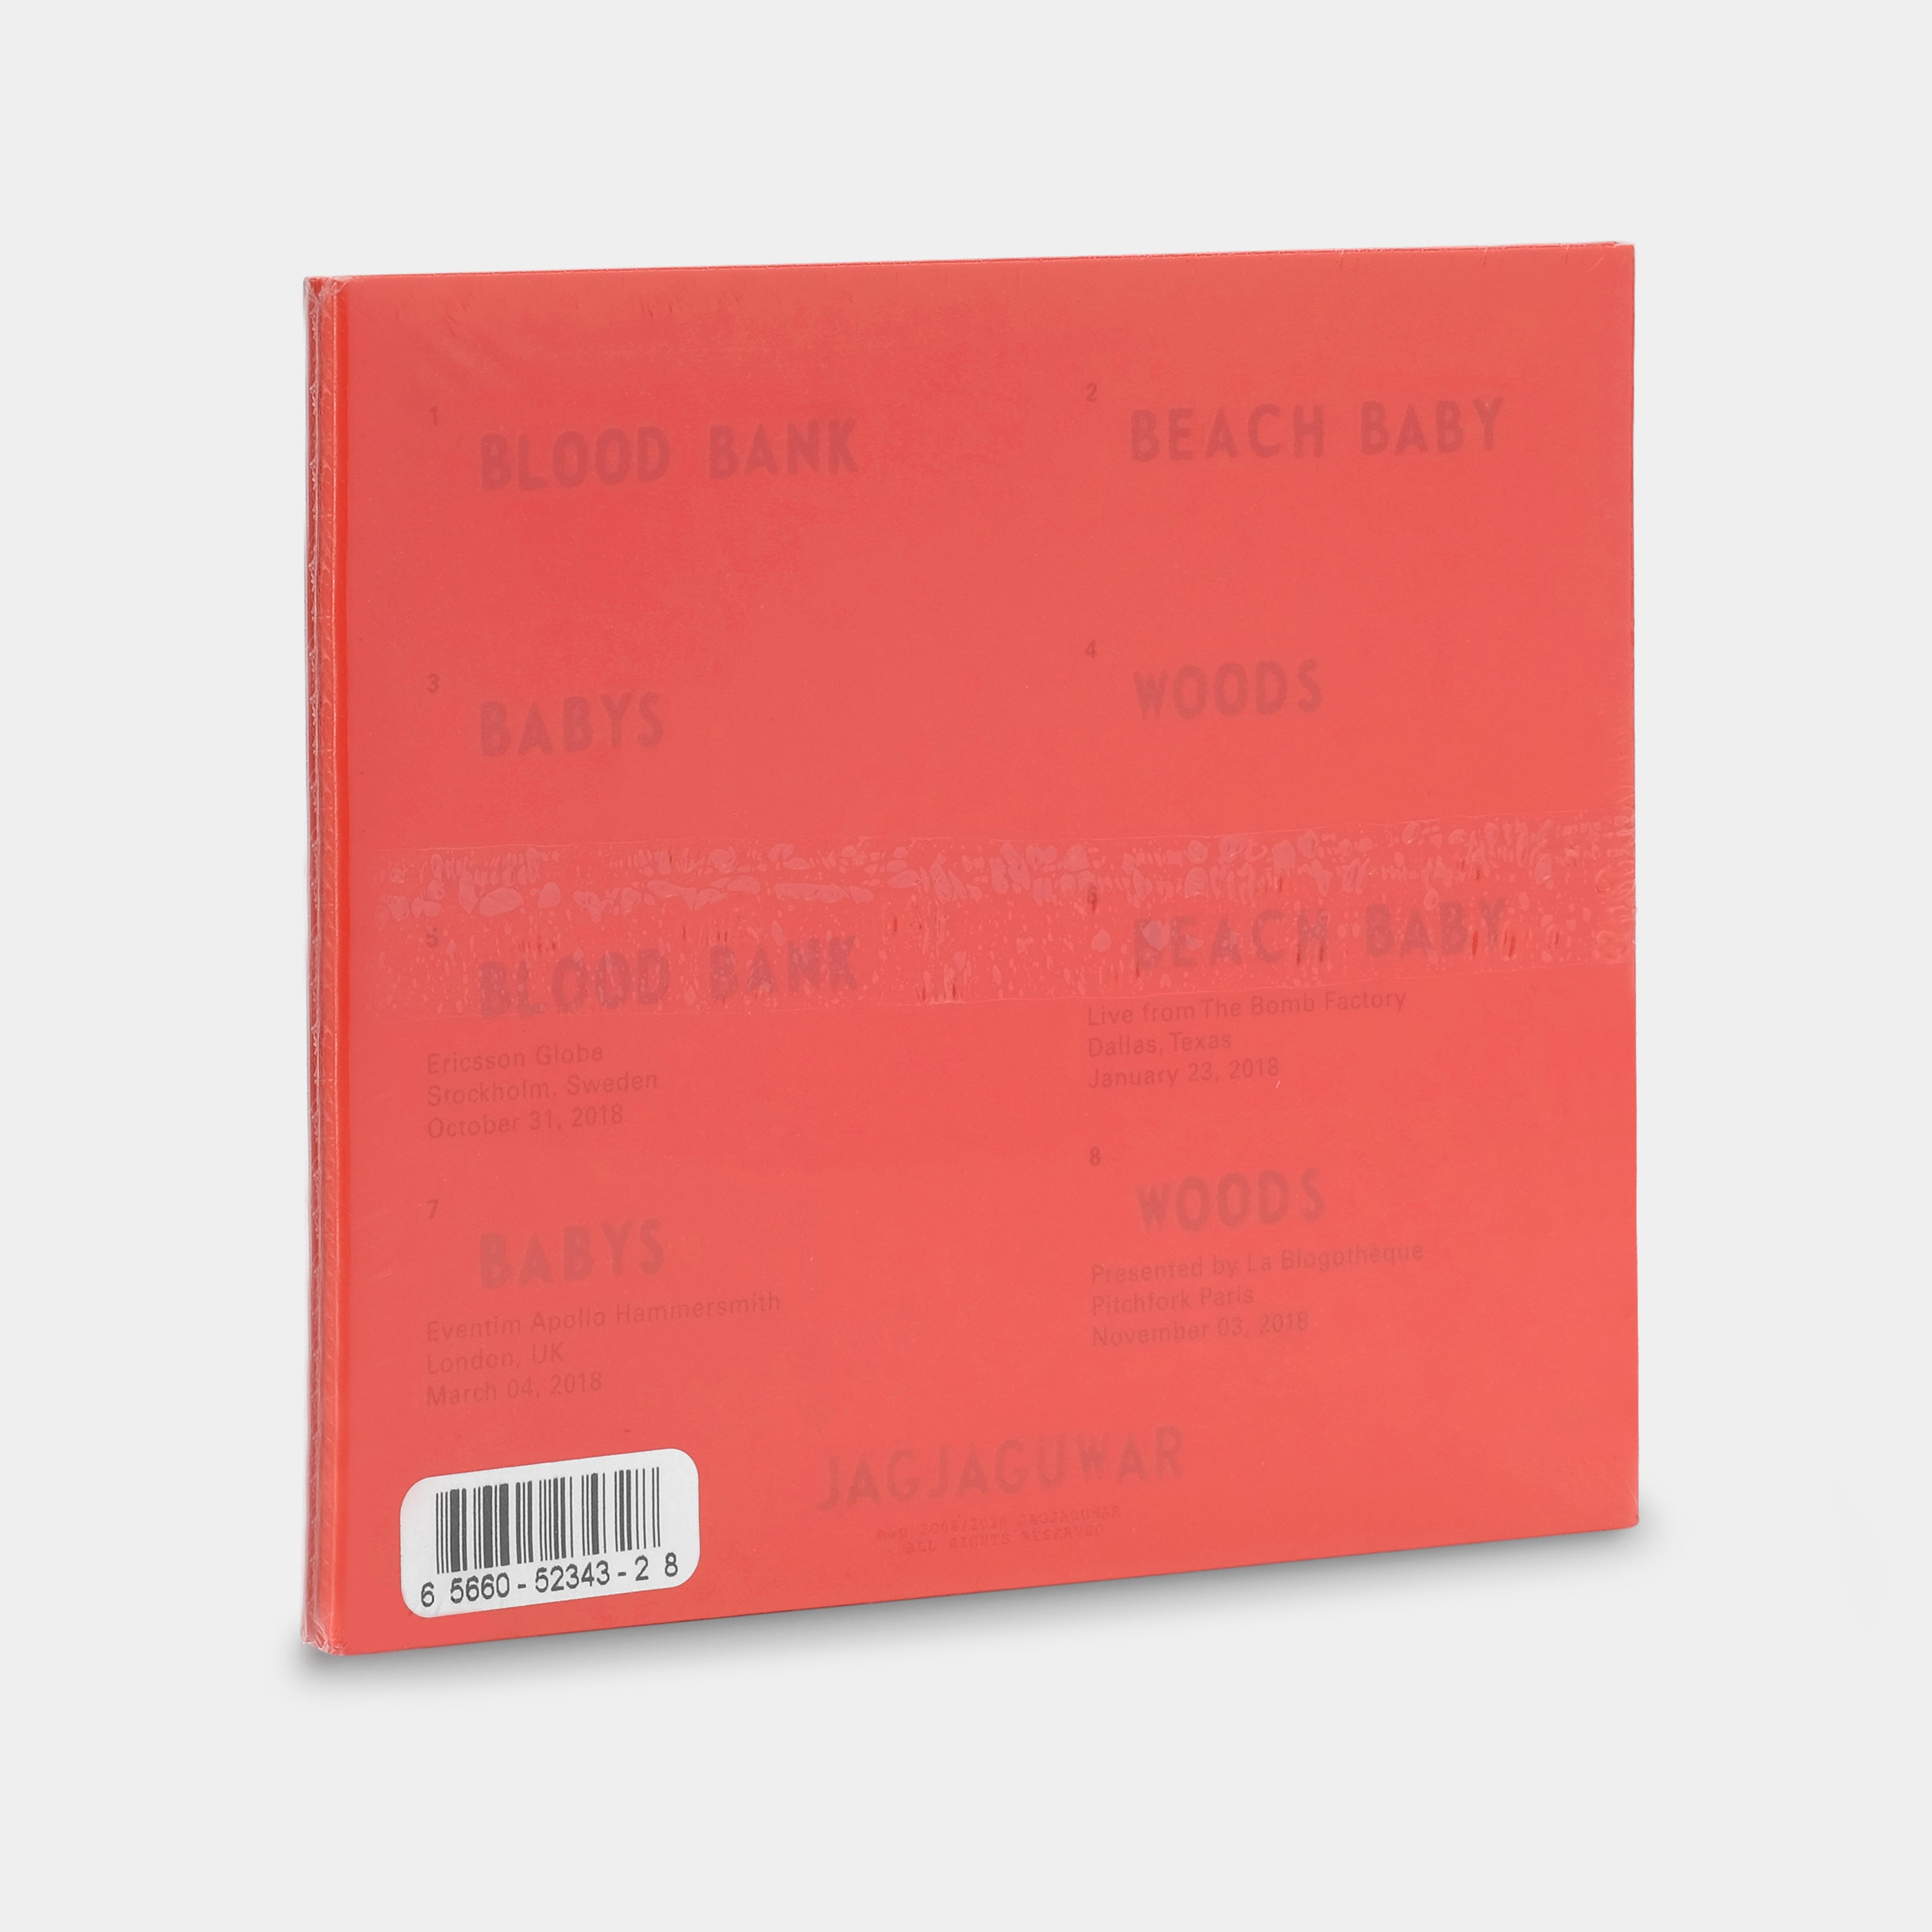 Bon Iver - Blood Bank (10th Anniversary Edition) CD